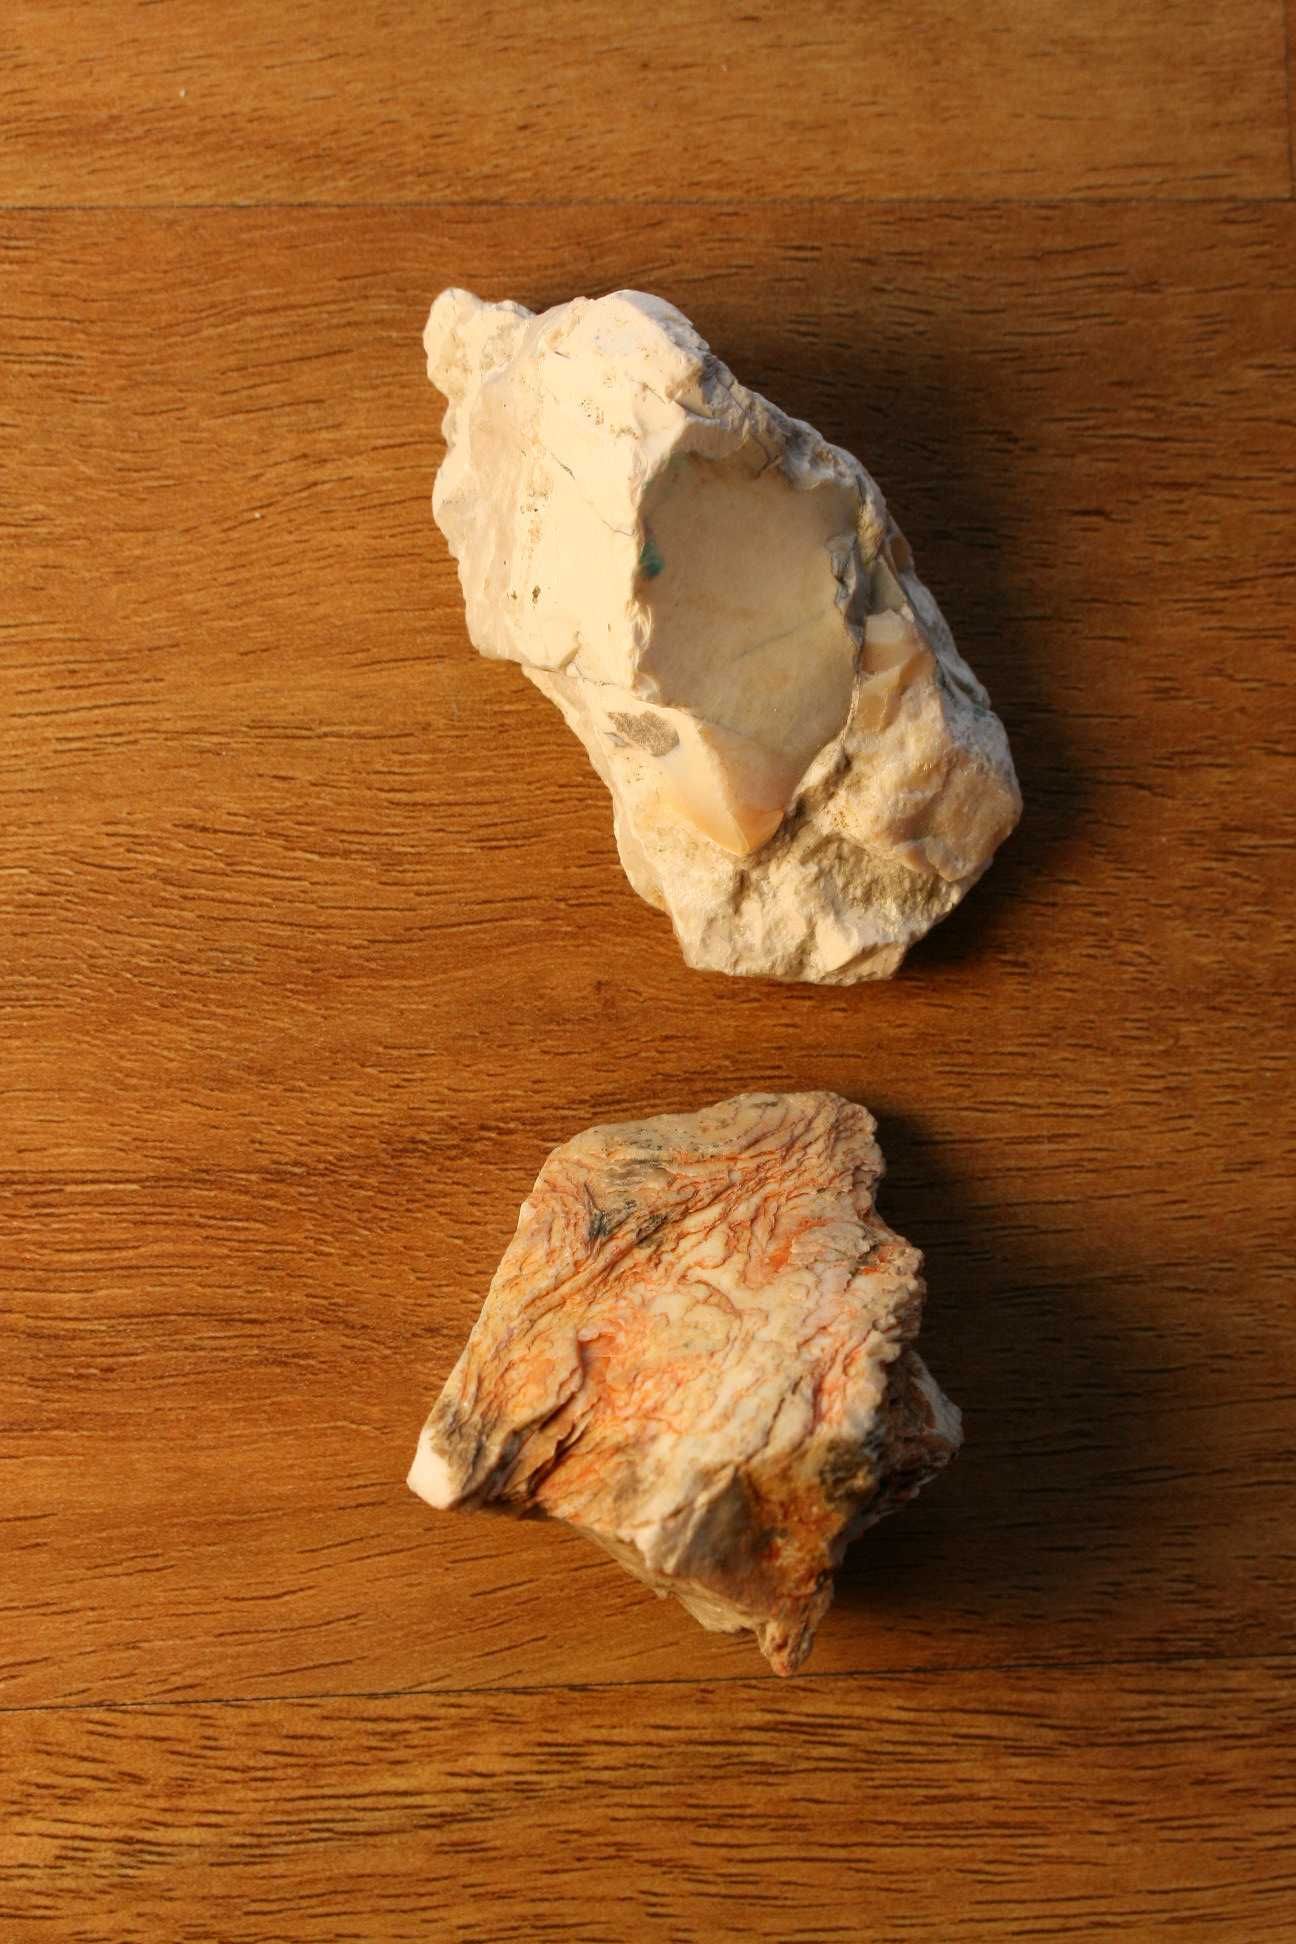 Minerais – Opala, feldspatos e moscovite (inclui envio)